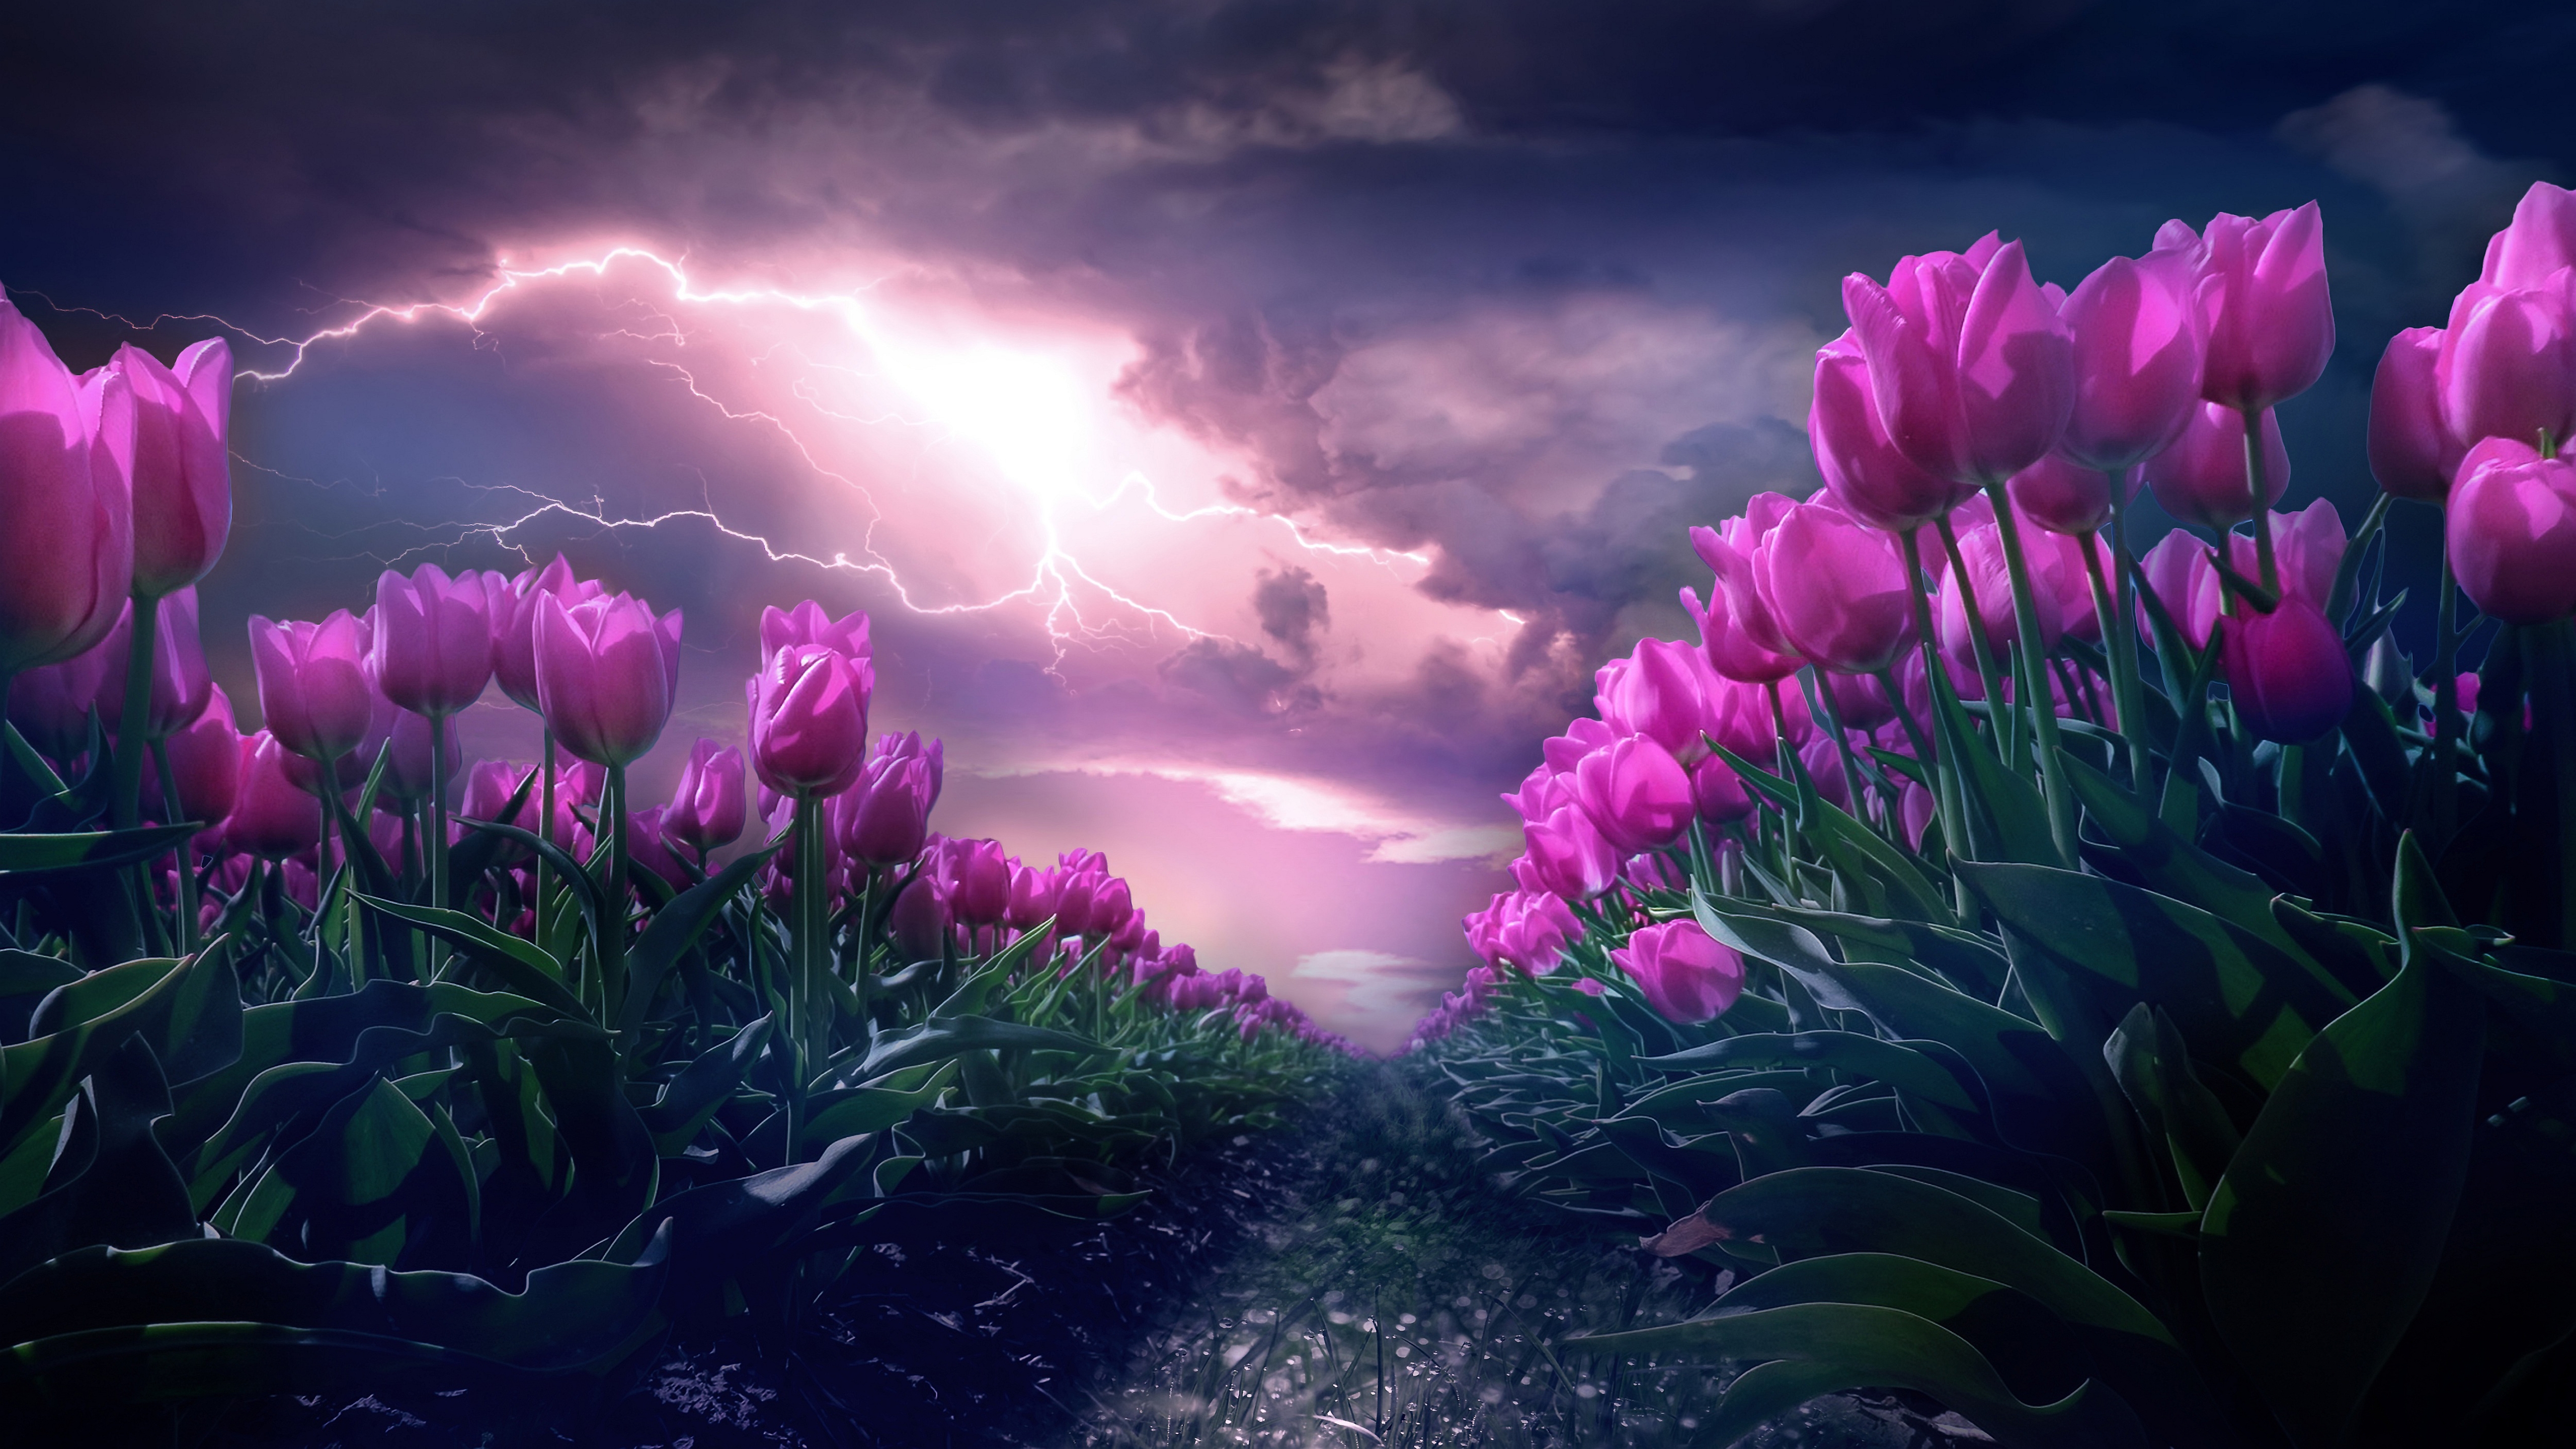 Wallpapers pink tulips lightning garden on the desktop